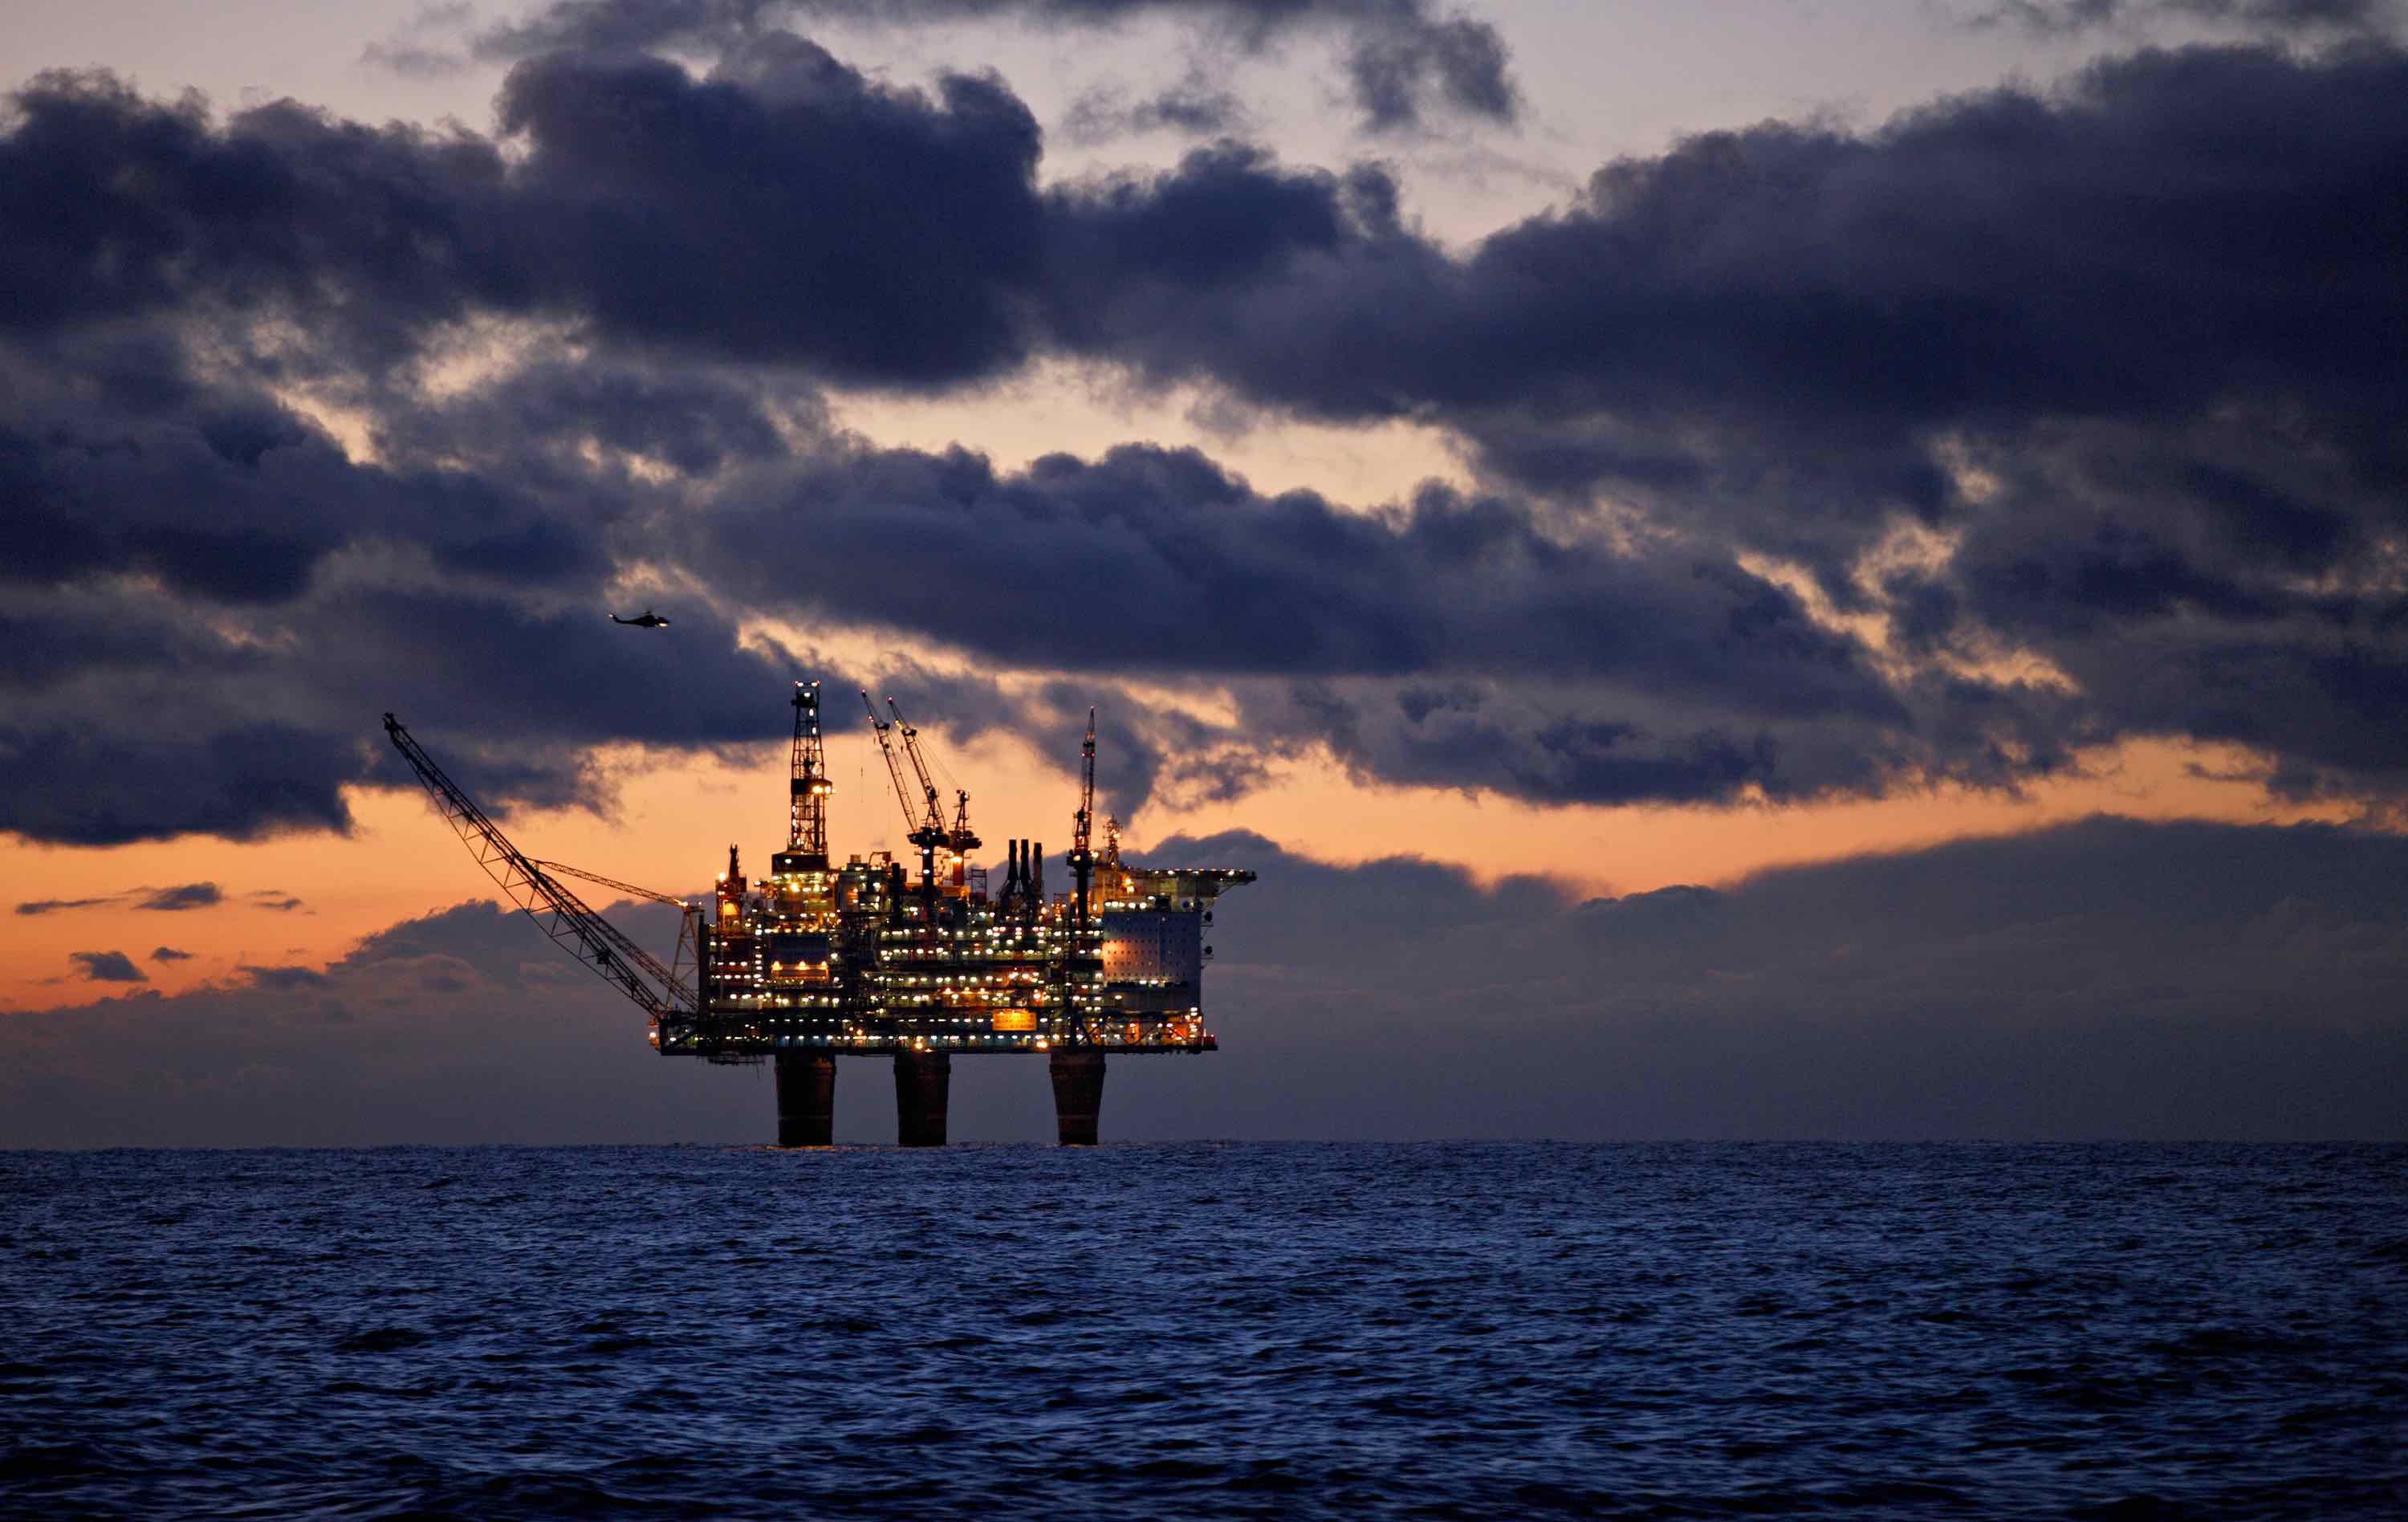 Norwegian Oil Platform in the North Sea - Oseberg Field - Sunrise Silhouette